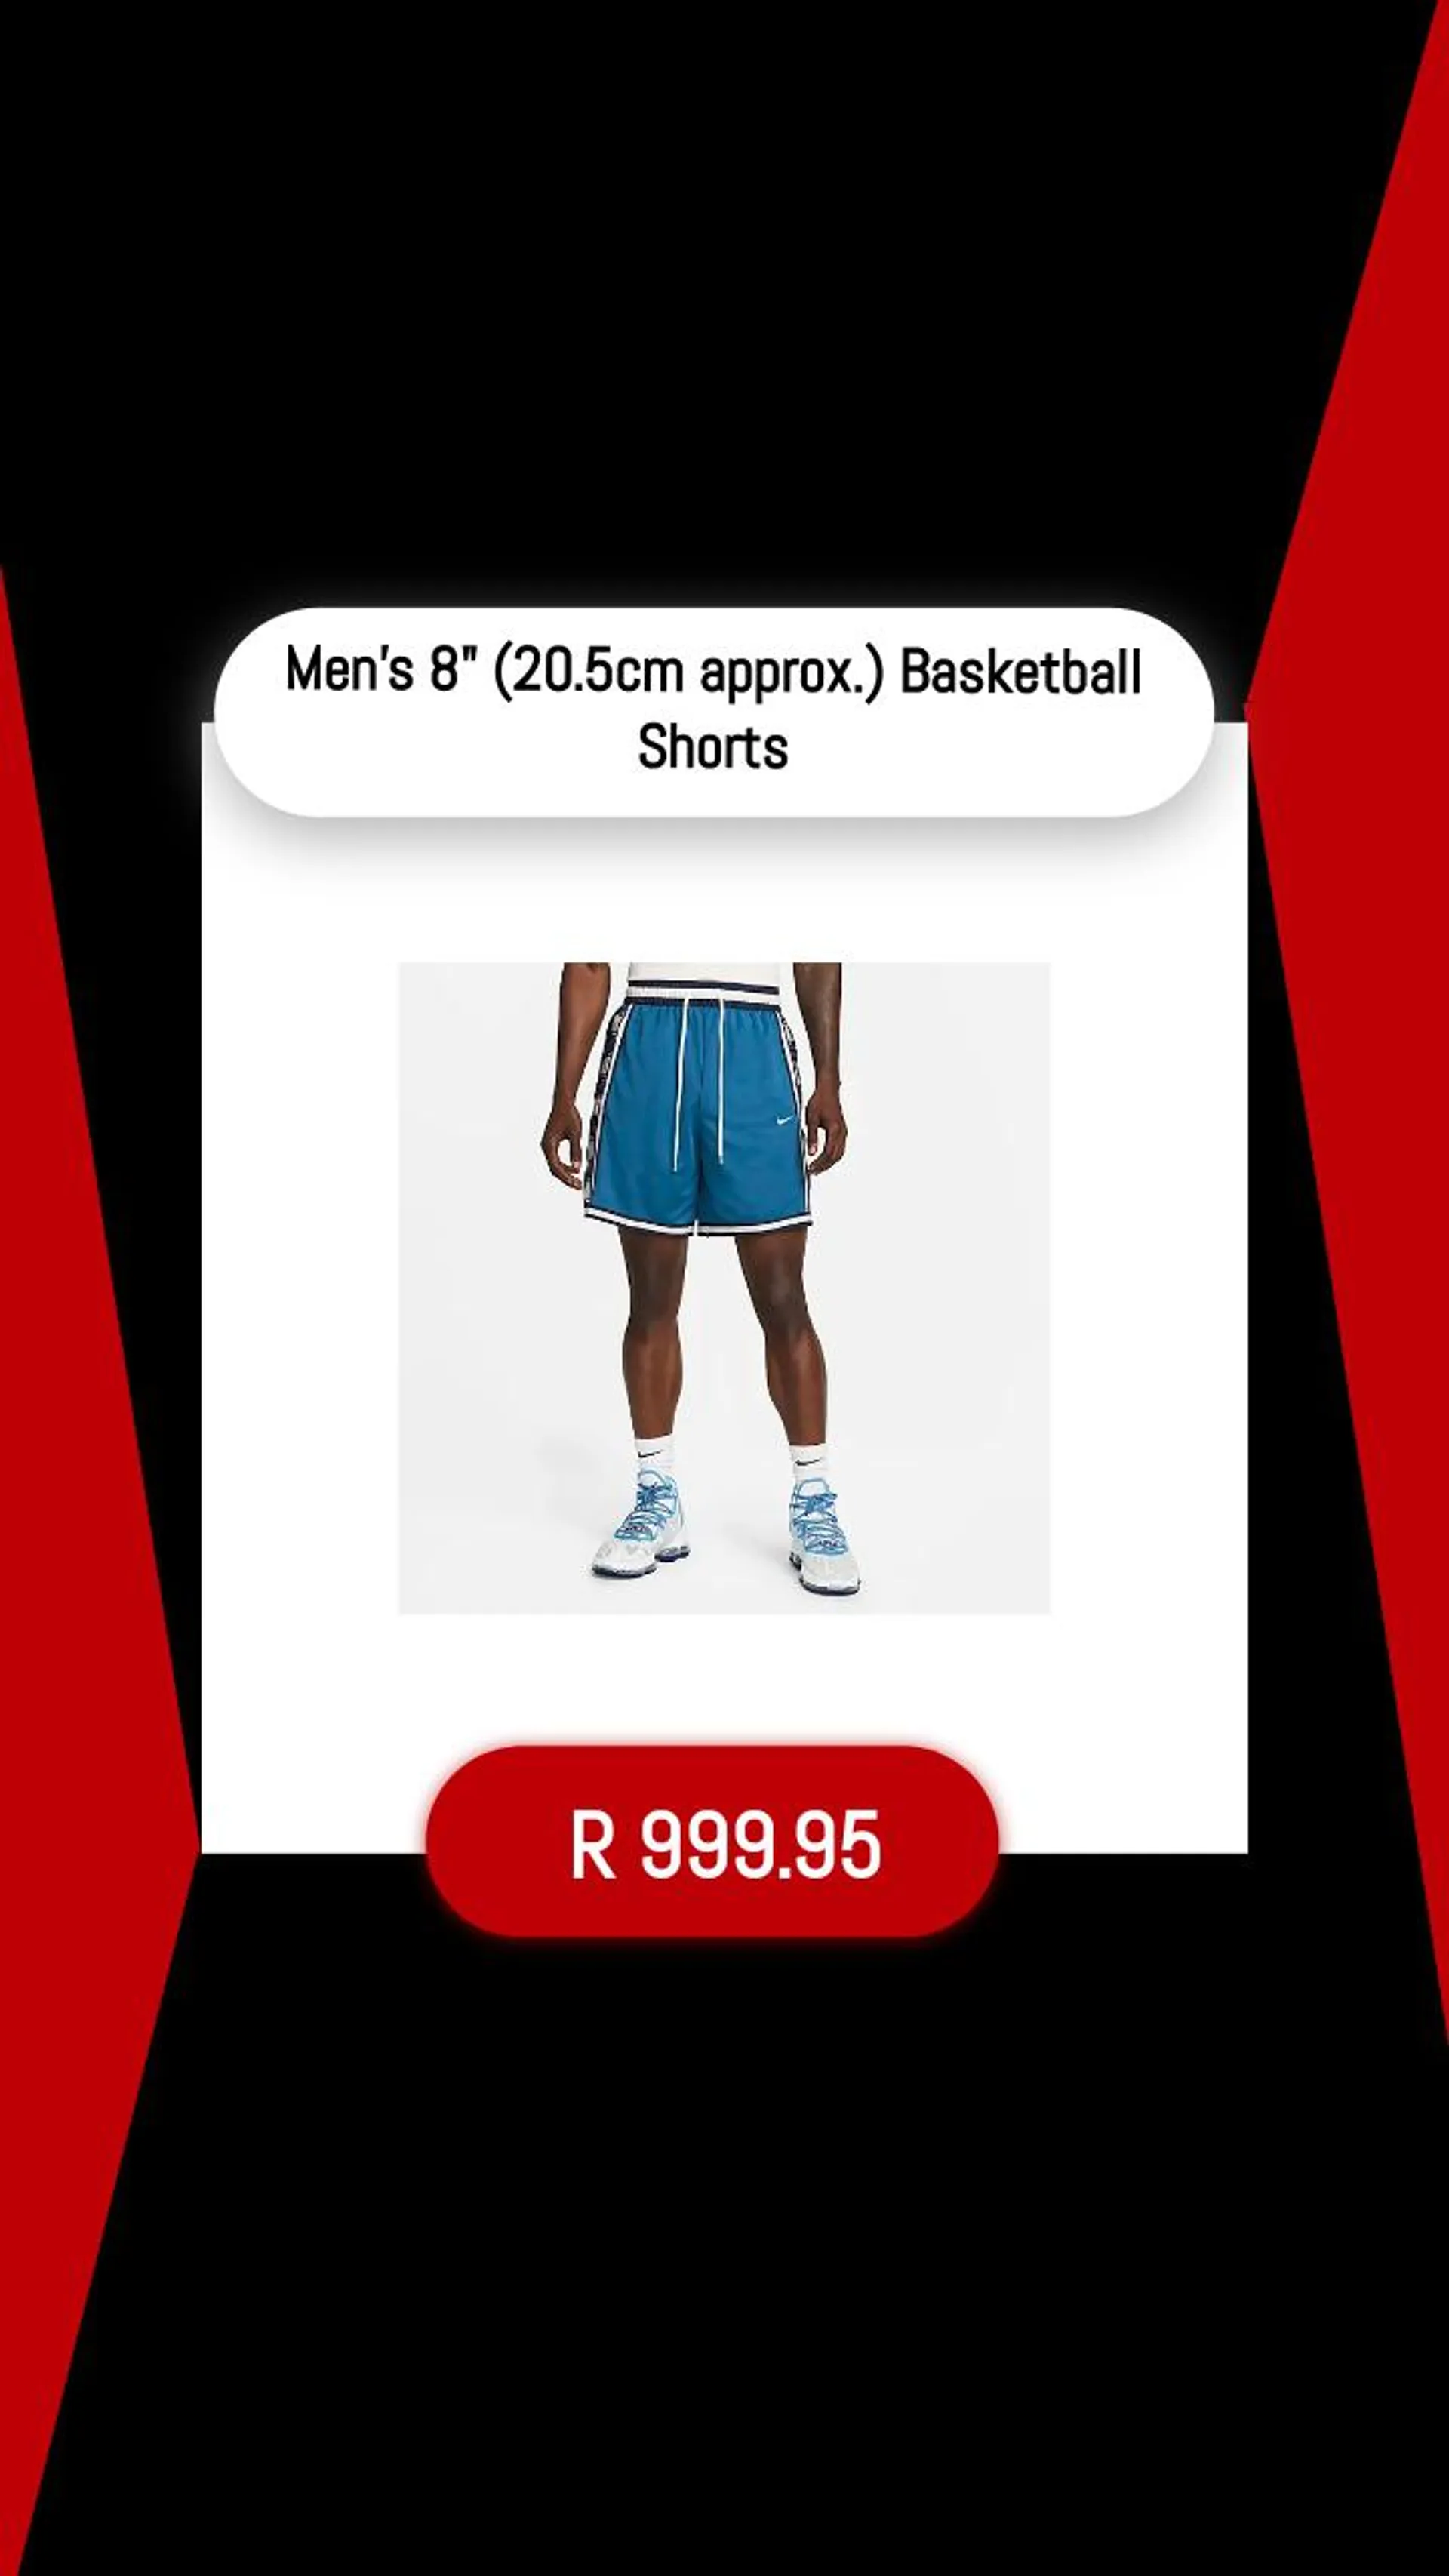 Mens 8" (20.5cm approx.) Basketball Shorts